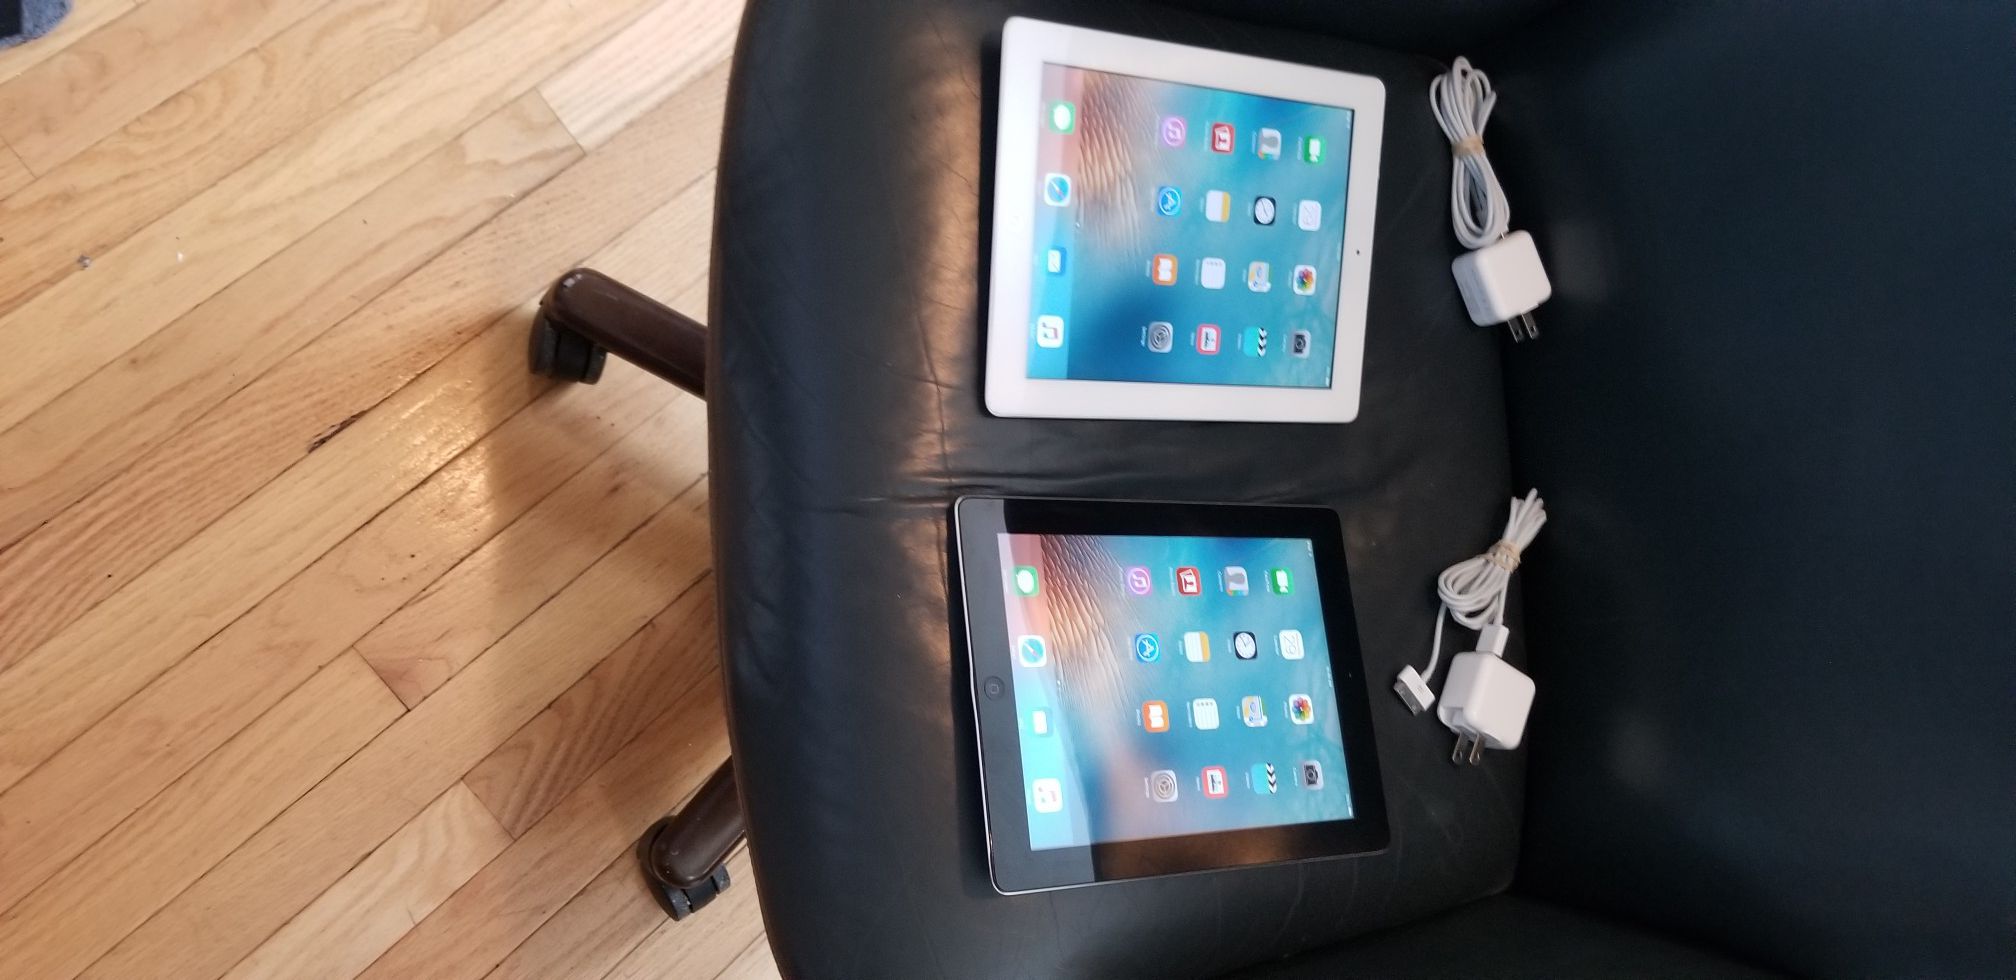 2 Apple iPad 2nd generation